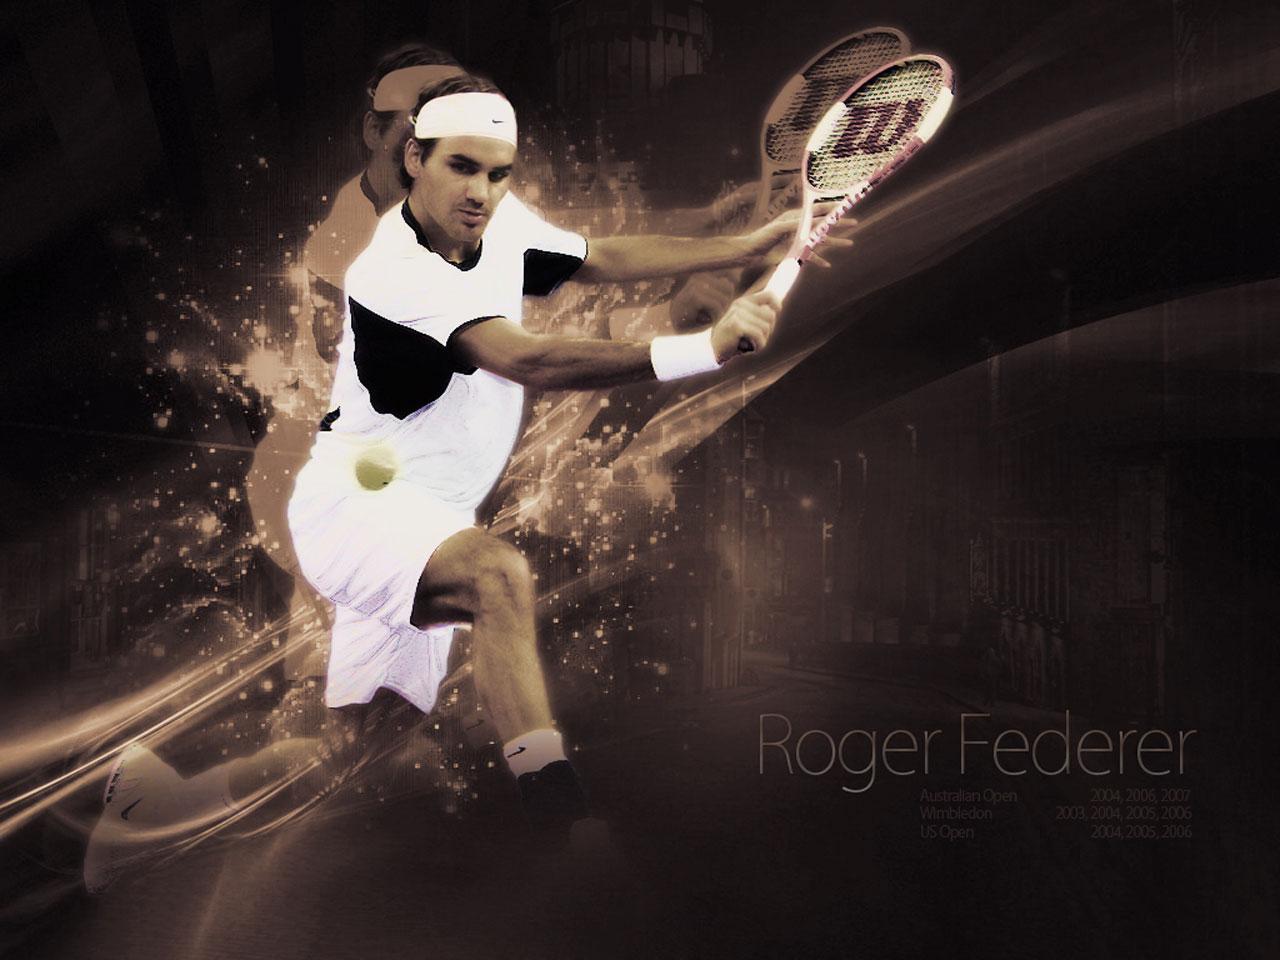 https://blogger.googleusercontent.com/img/b/R29vZ2xl/AVvXsEjwSjnrJJnhUano8Pr1YNGt6OKI545FMQ9cVLjpqPkIgQYuRIbBS6hFw6VMdD5OEqWSklB93vASuoCuLjGMI10o0kQxYjyuC8DYq7cKiwM9mp5KCxNS6GQc6s5KrkIAVzh2x7pdUqVMENzb/s1600/Roger+Federer+hd+Wallpape_2.jpg